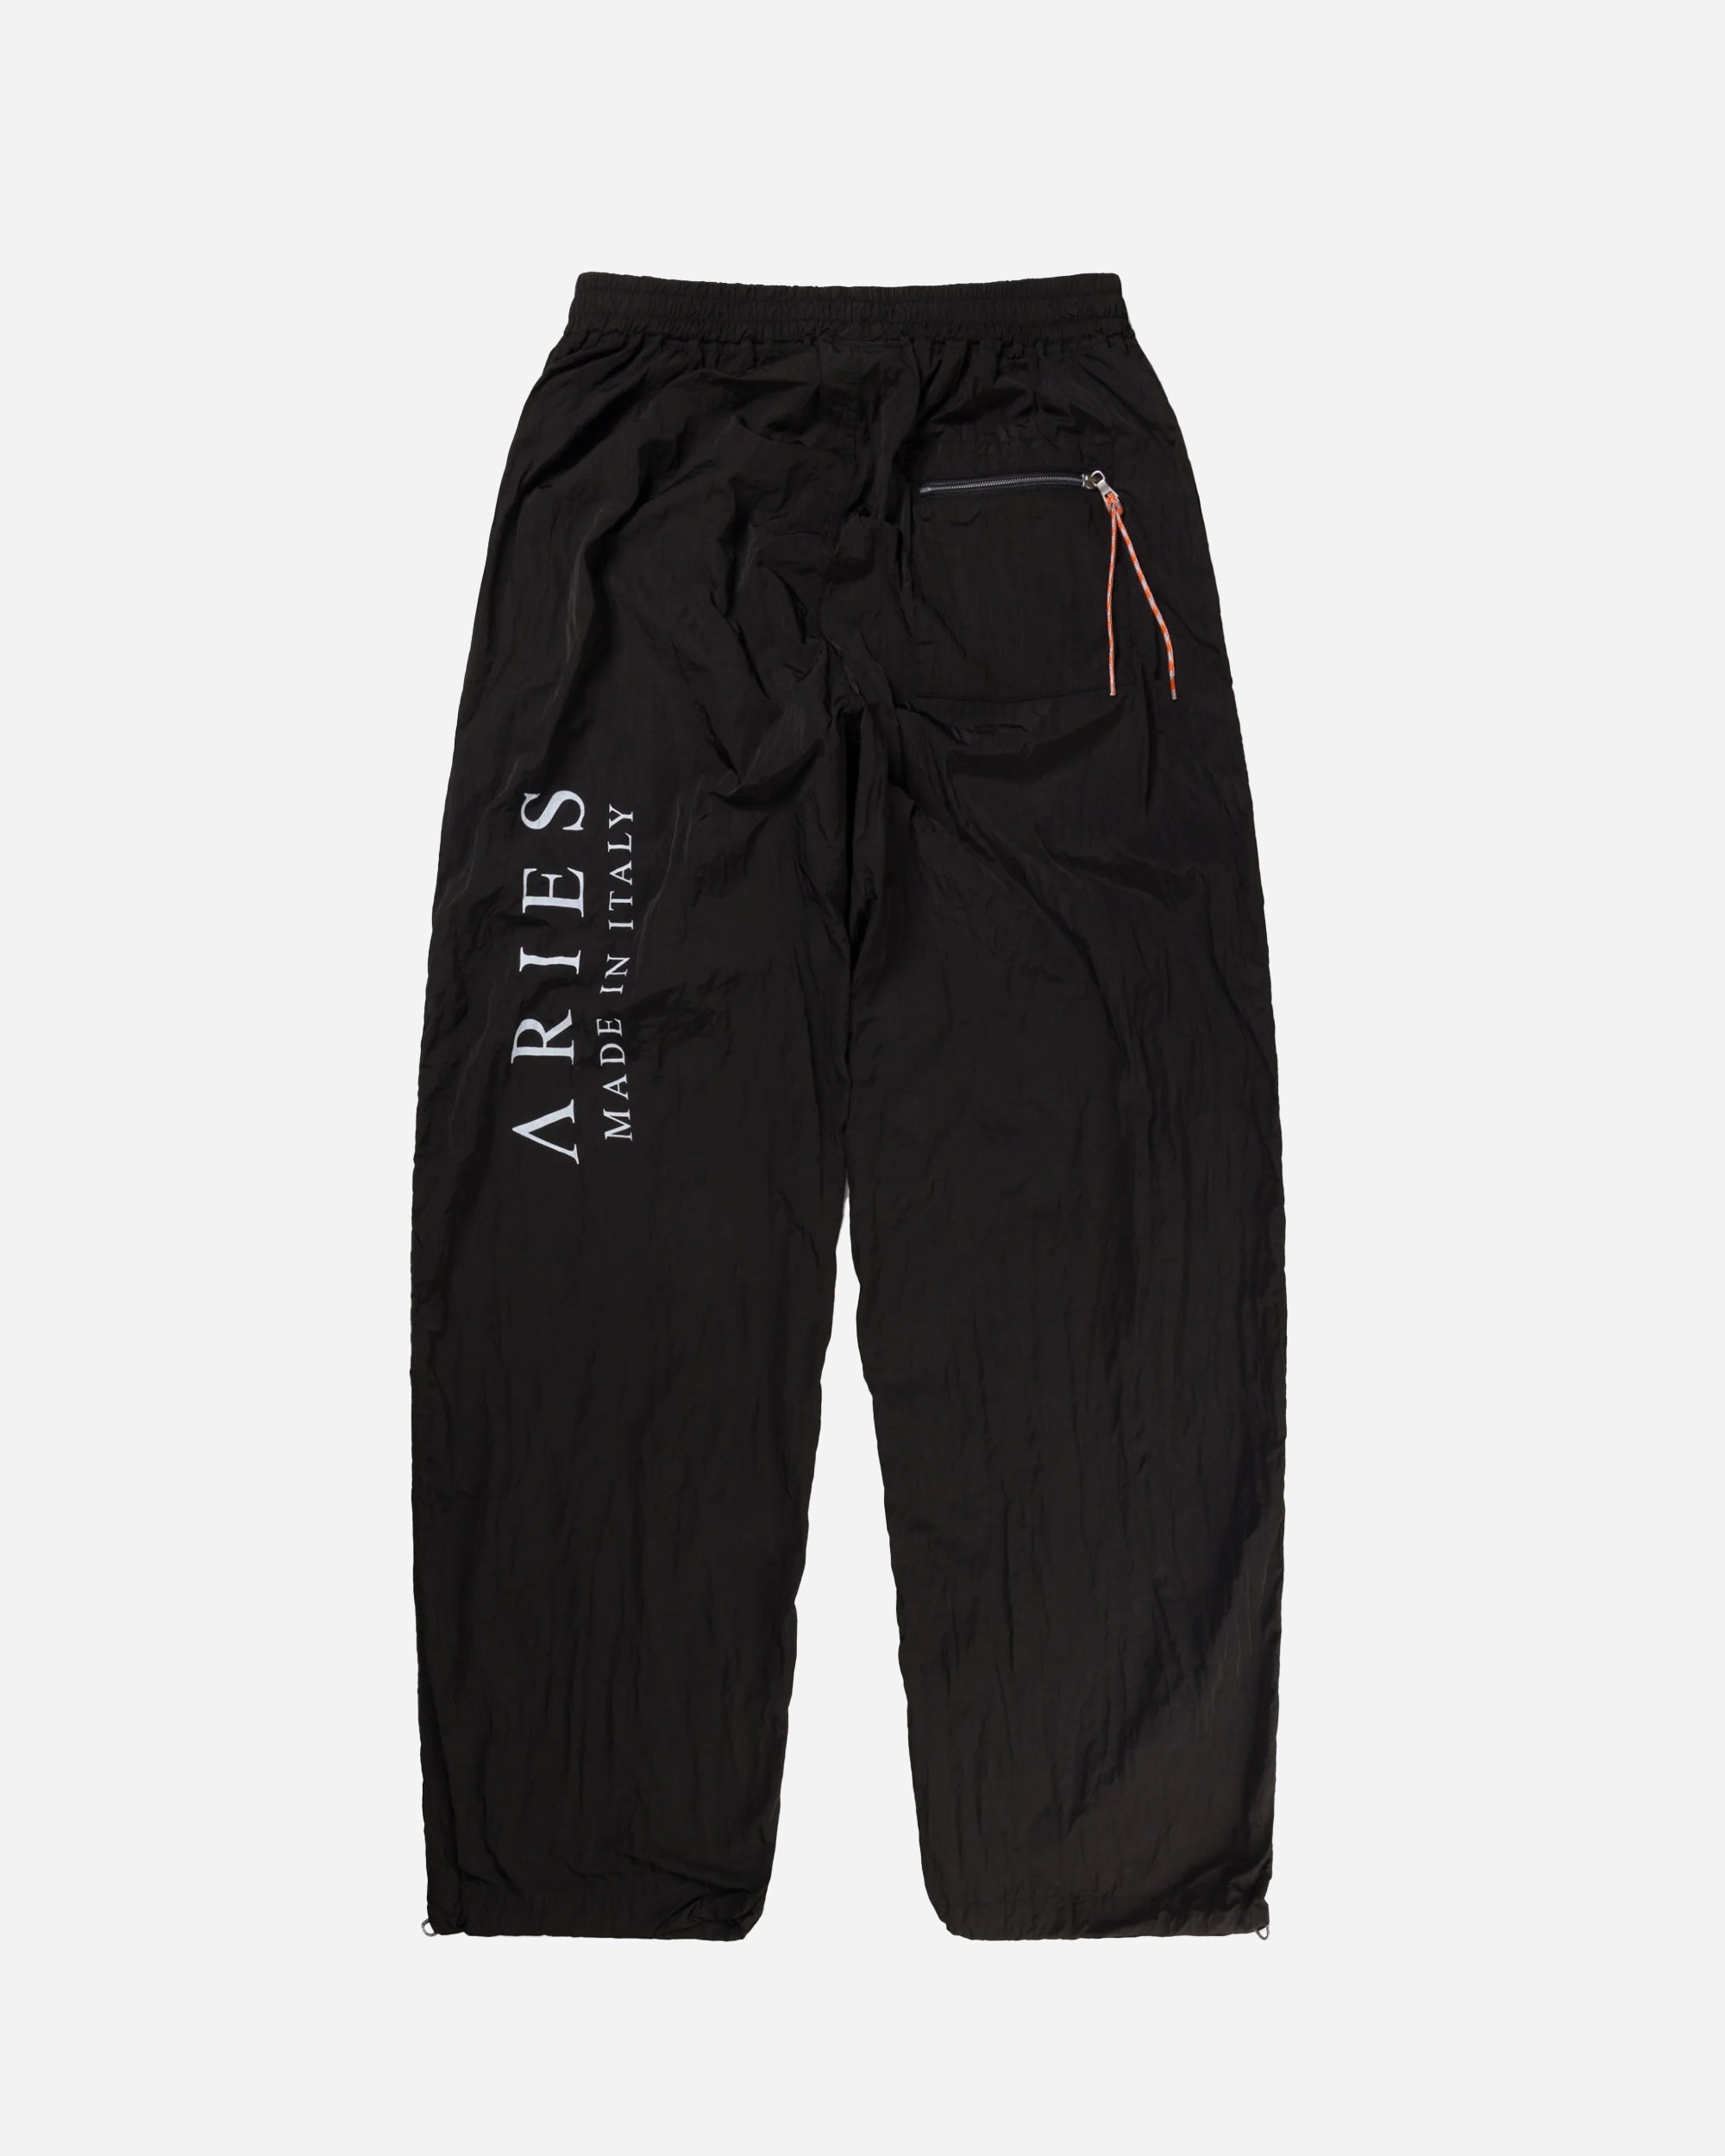 ARIES Classic Windcheater Pants Black   FUAR30700